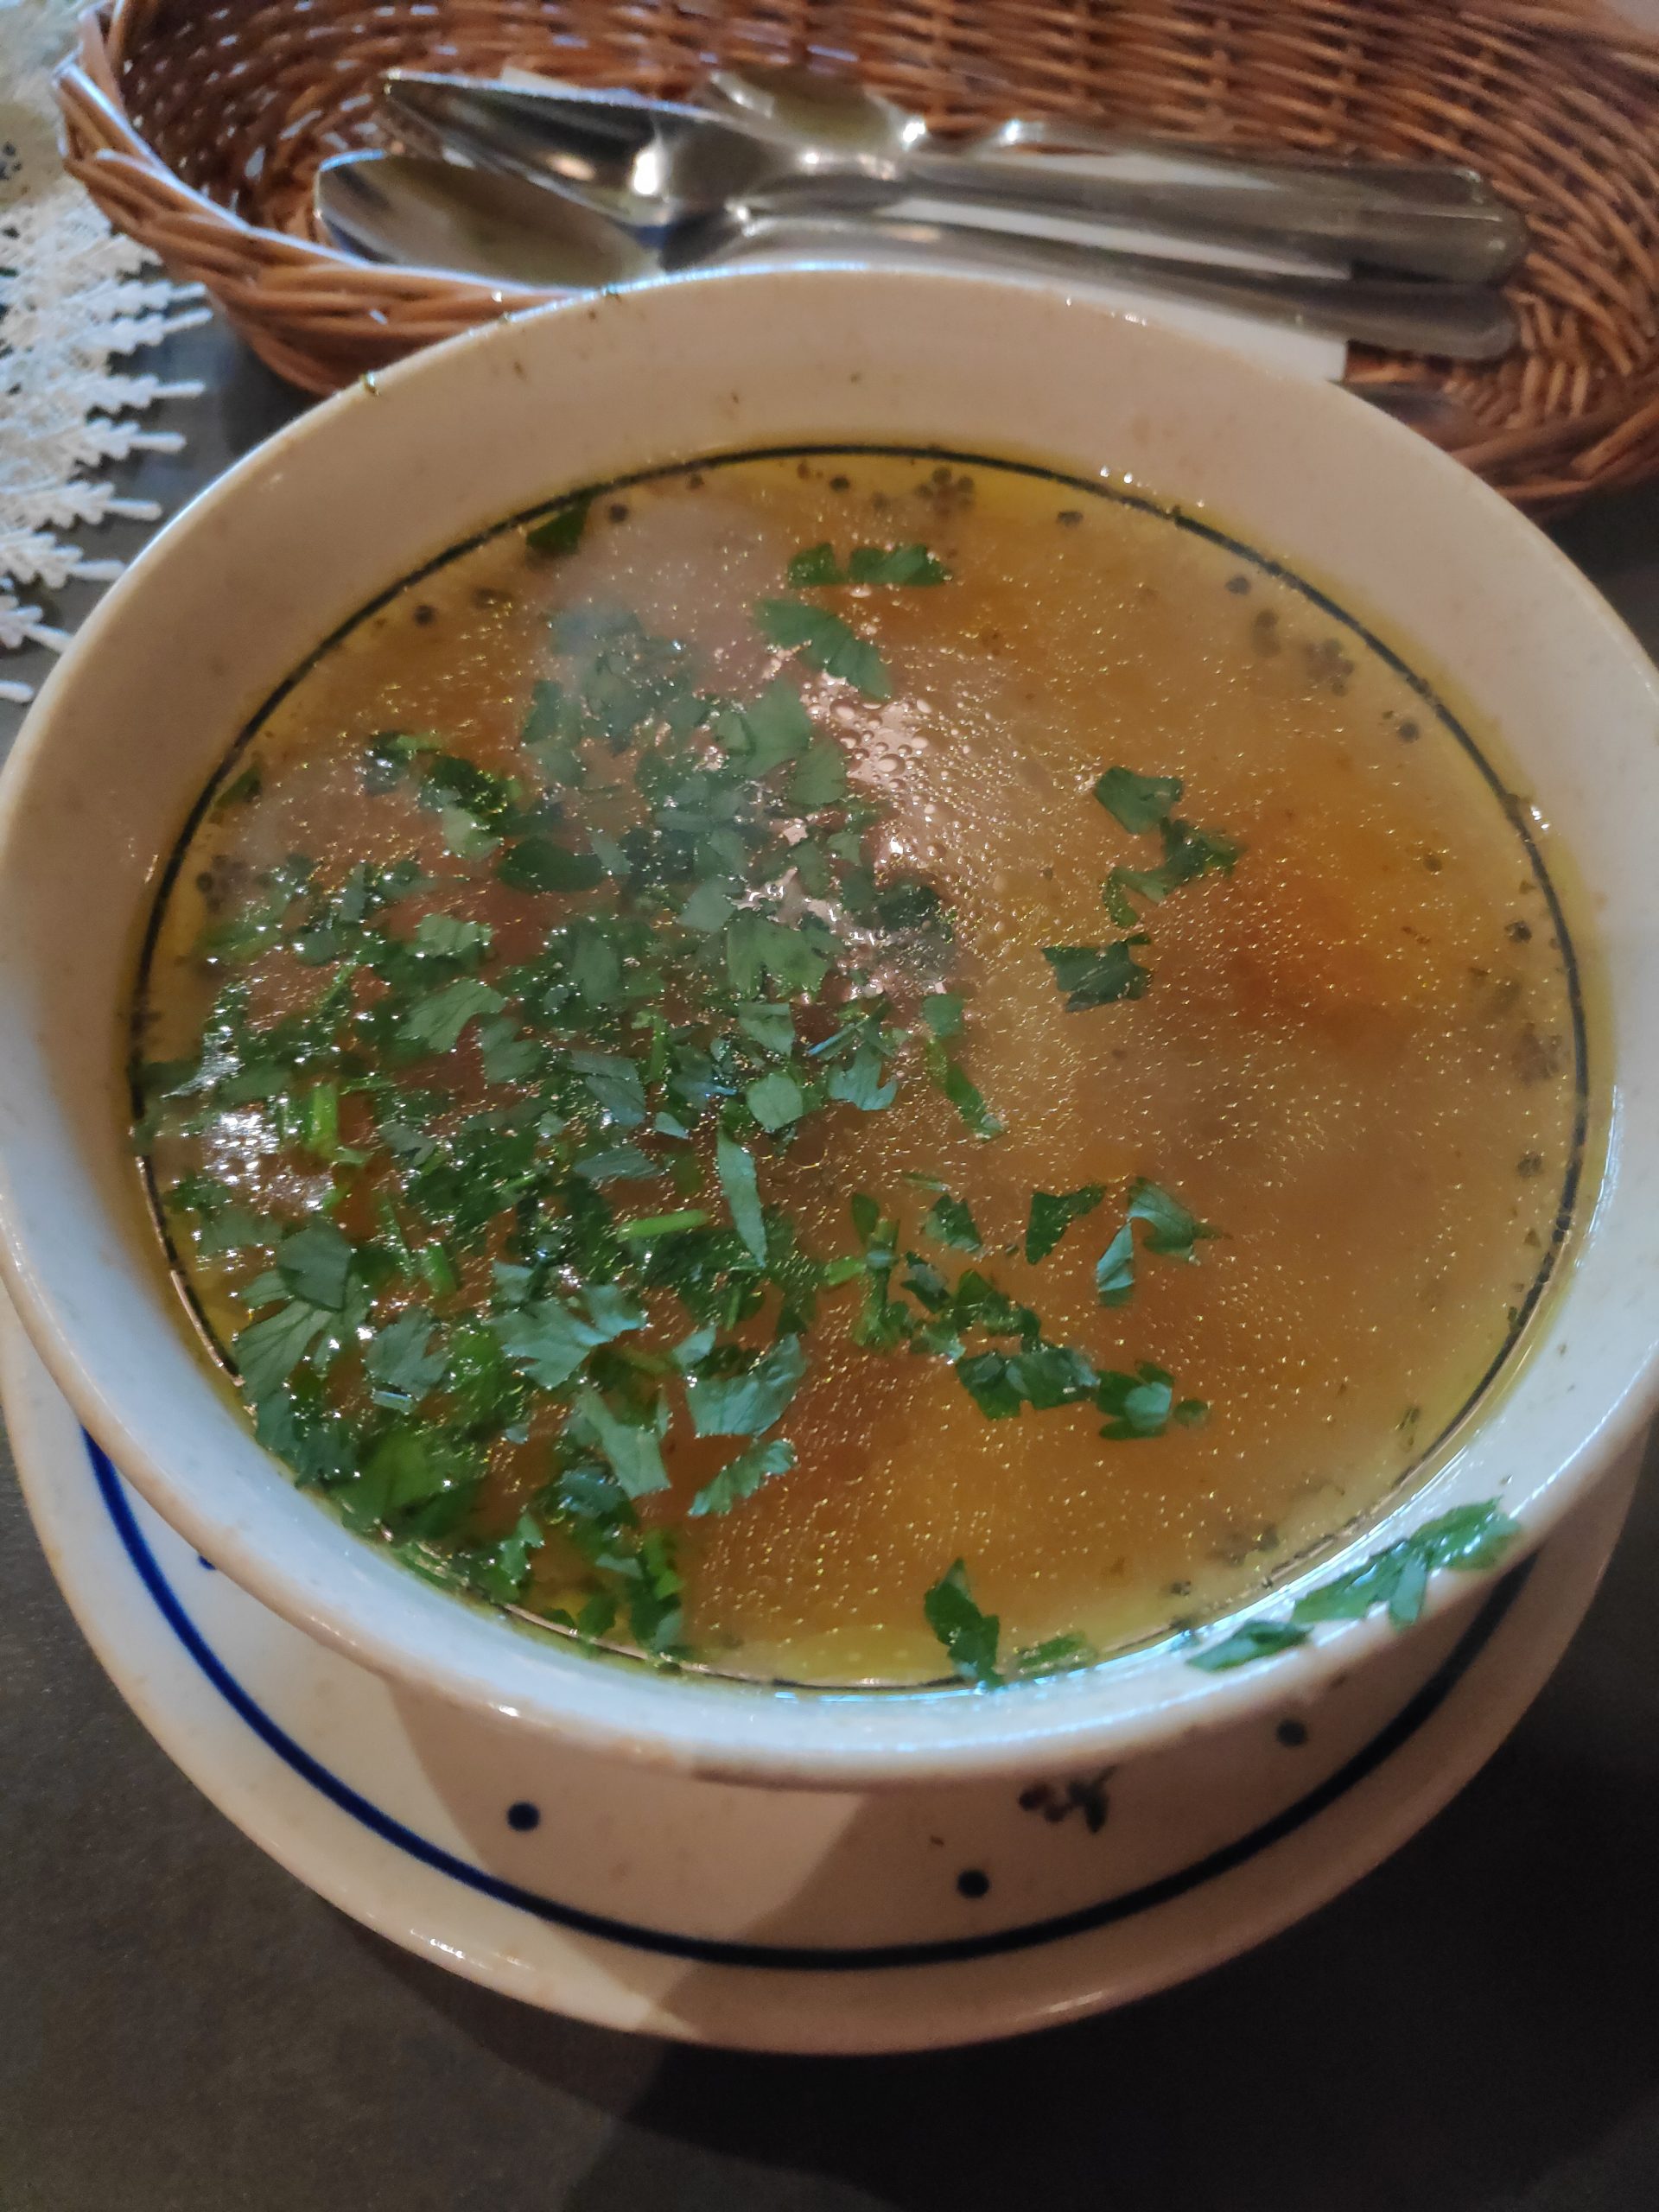 Beef soup with pierogi.